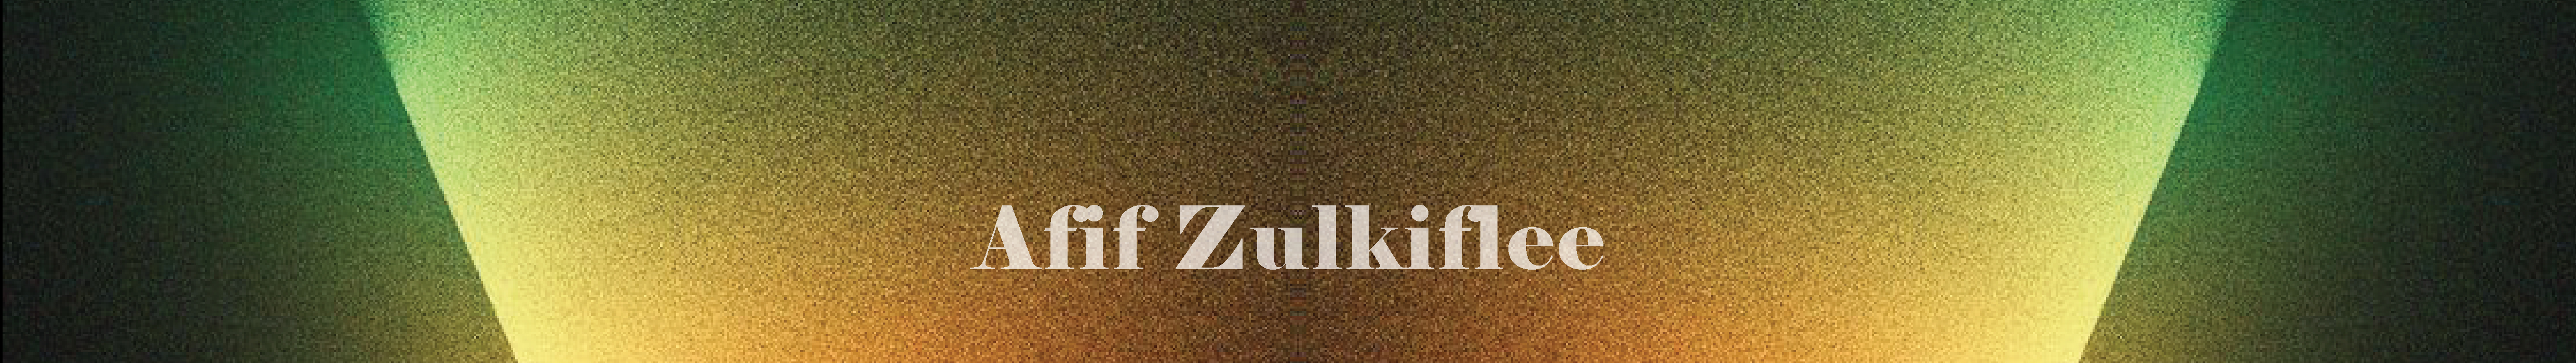 Afif Zulkiflee's profile banner